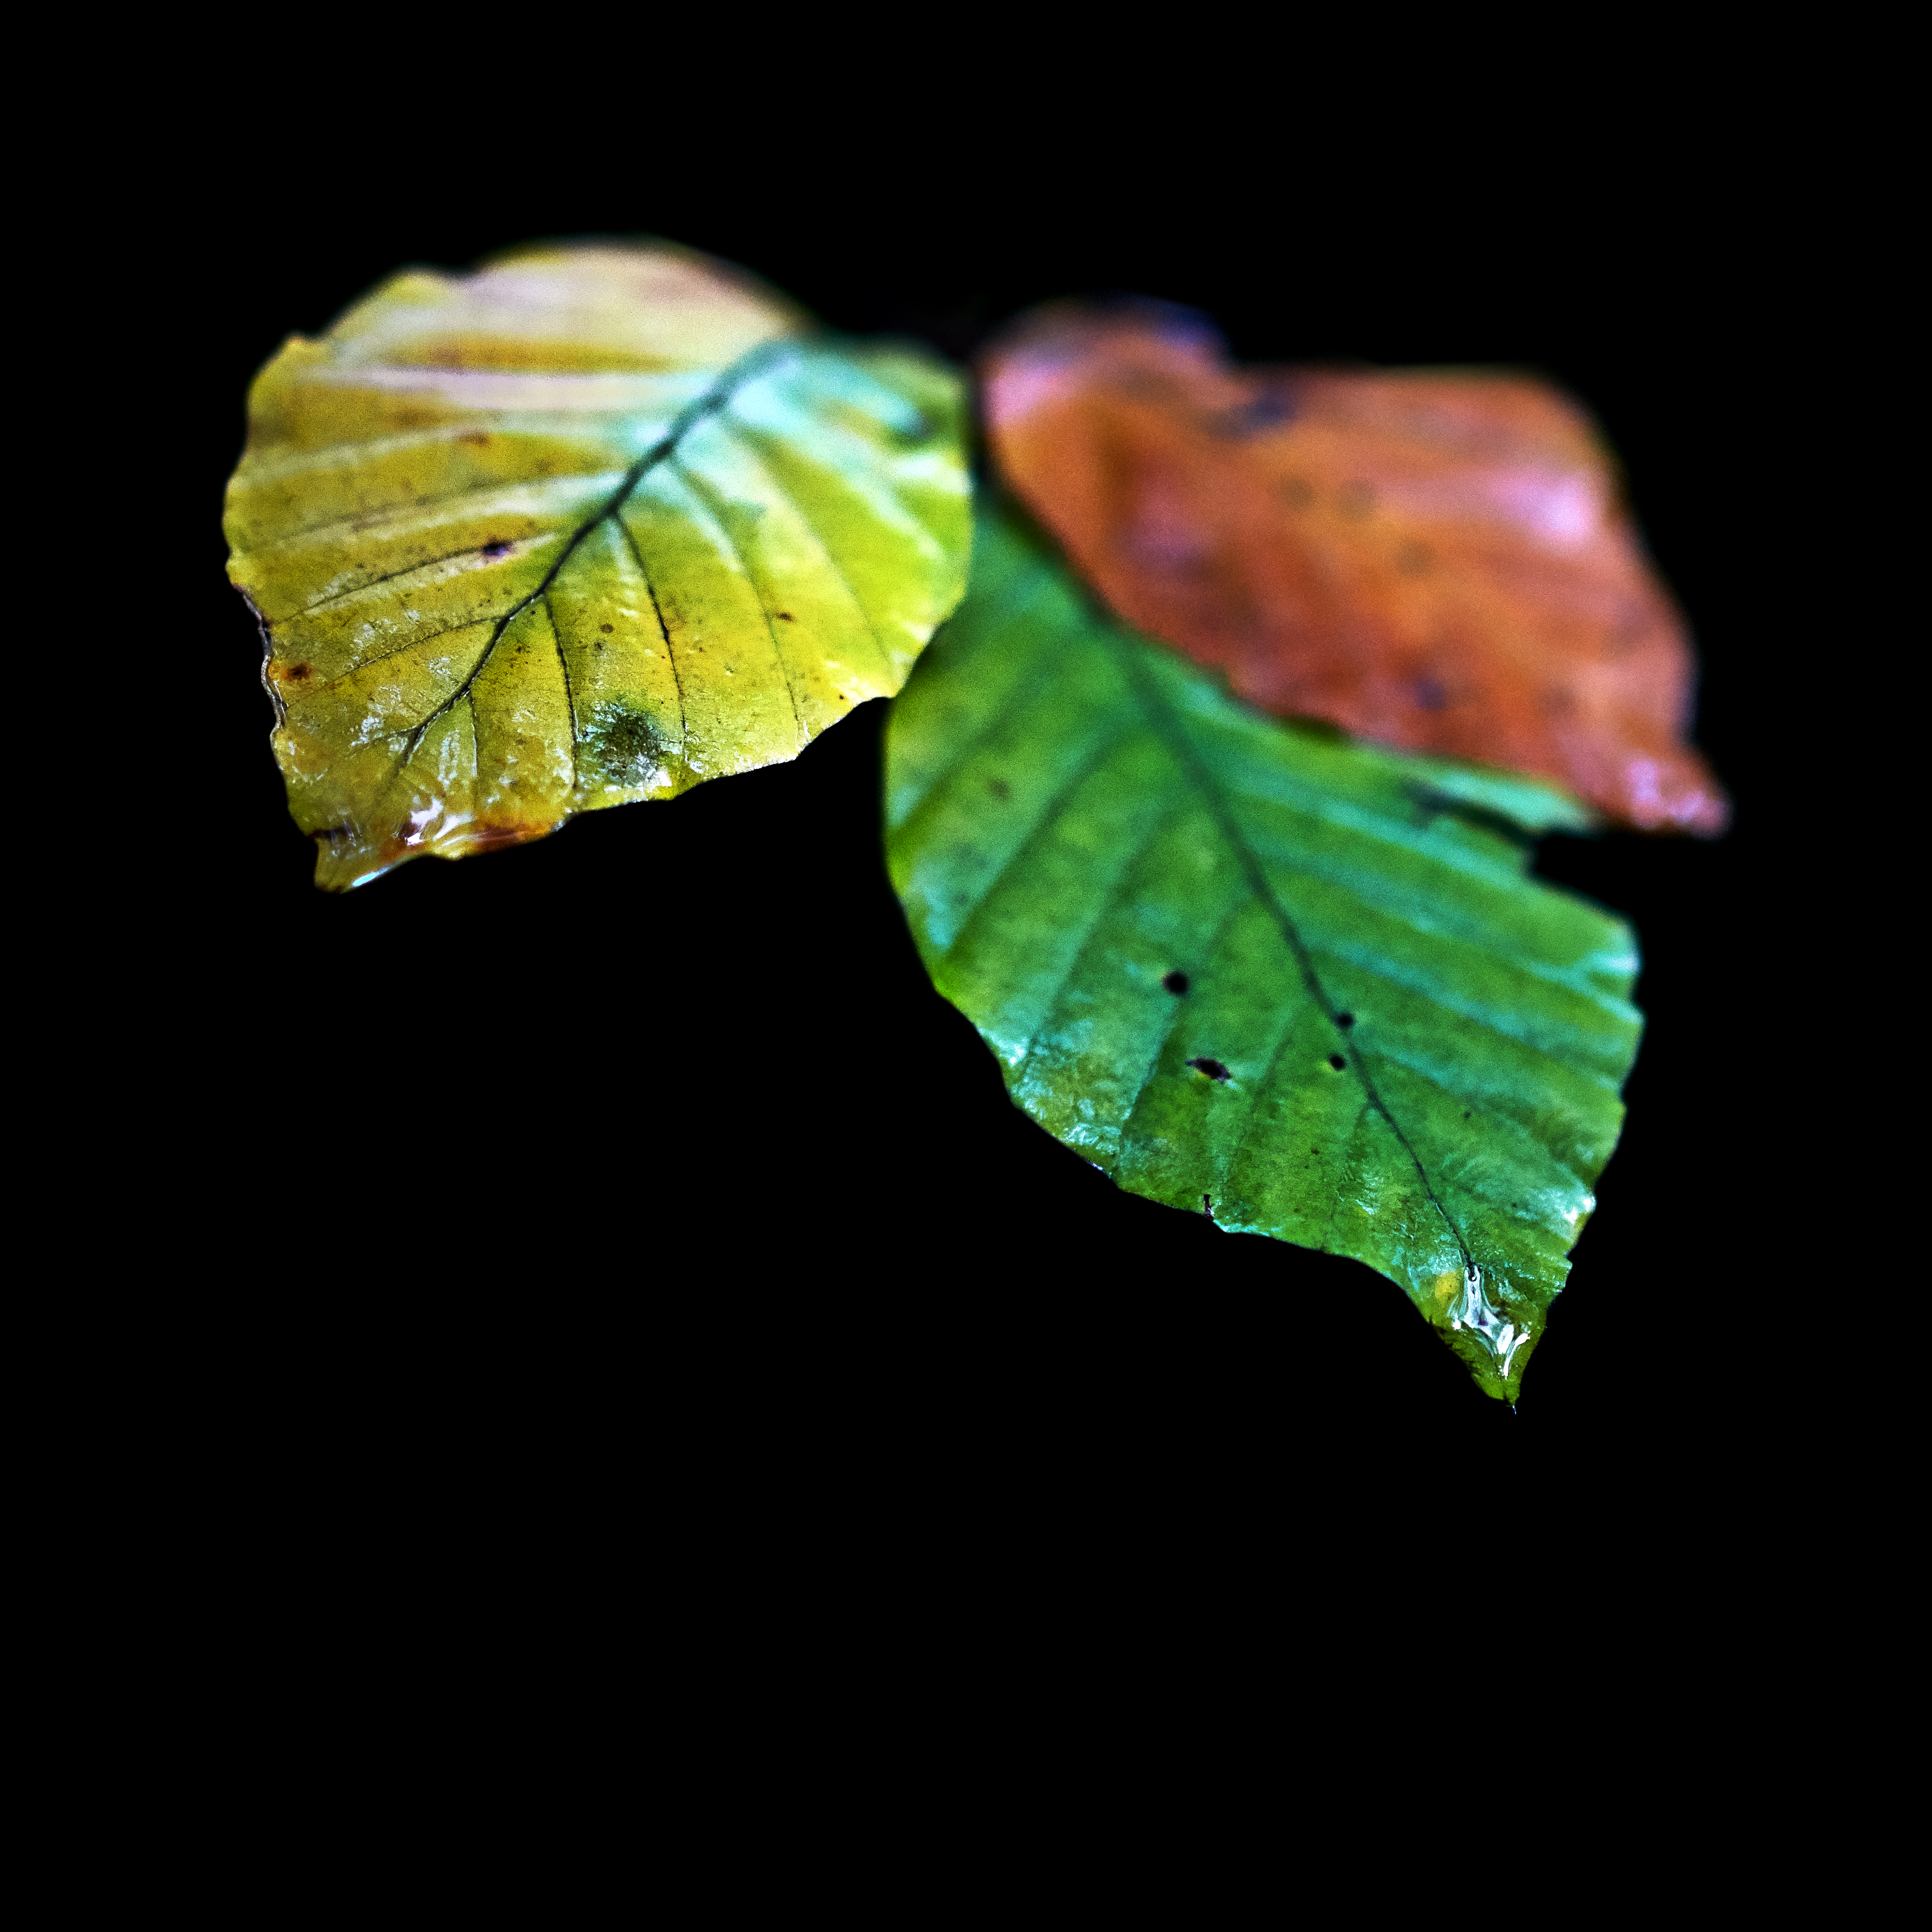 Low key image of three leaves